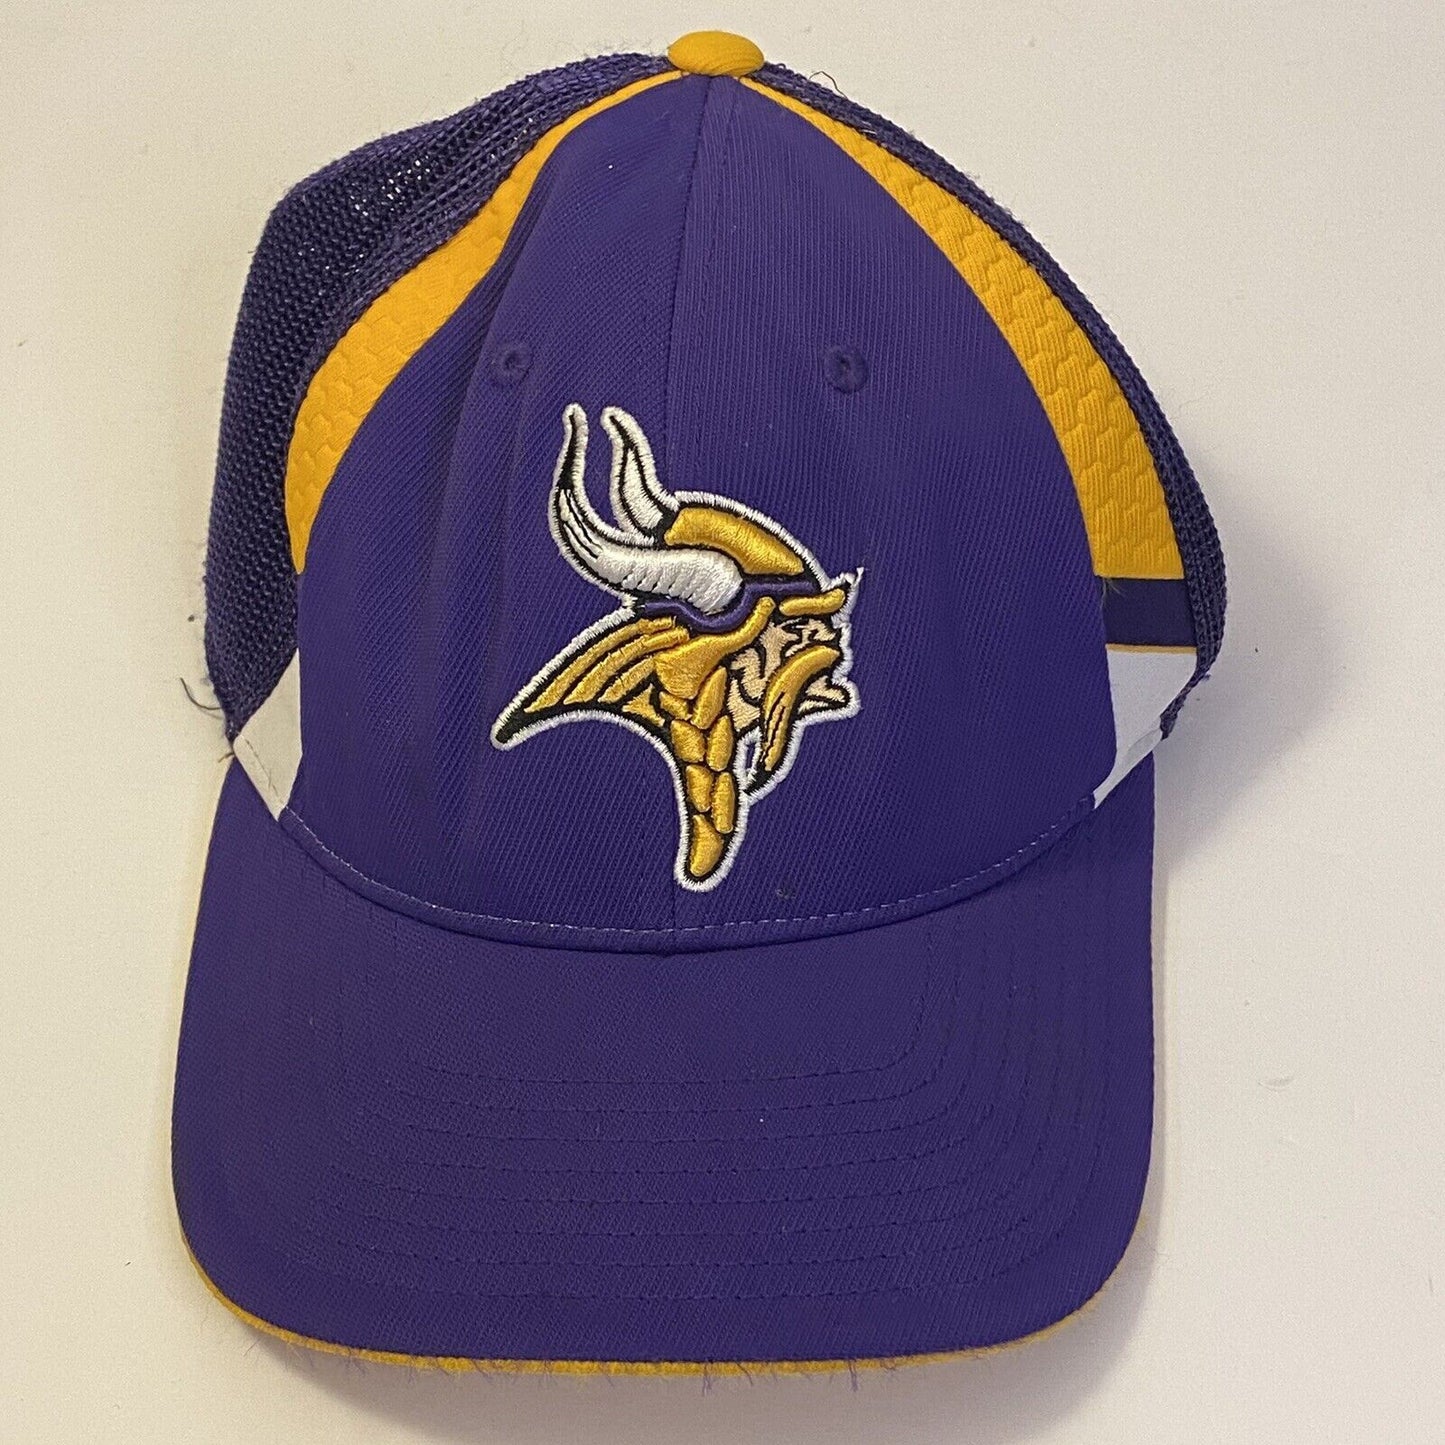 Reebok Minnesota Vikings Purple/Yellow (OSFA) NFL EQUIPMENT Mesh Trucker Hat